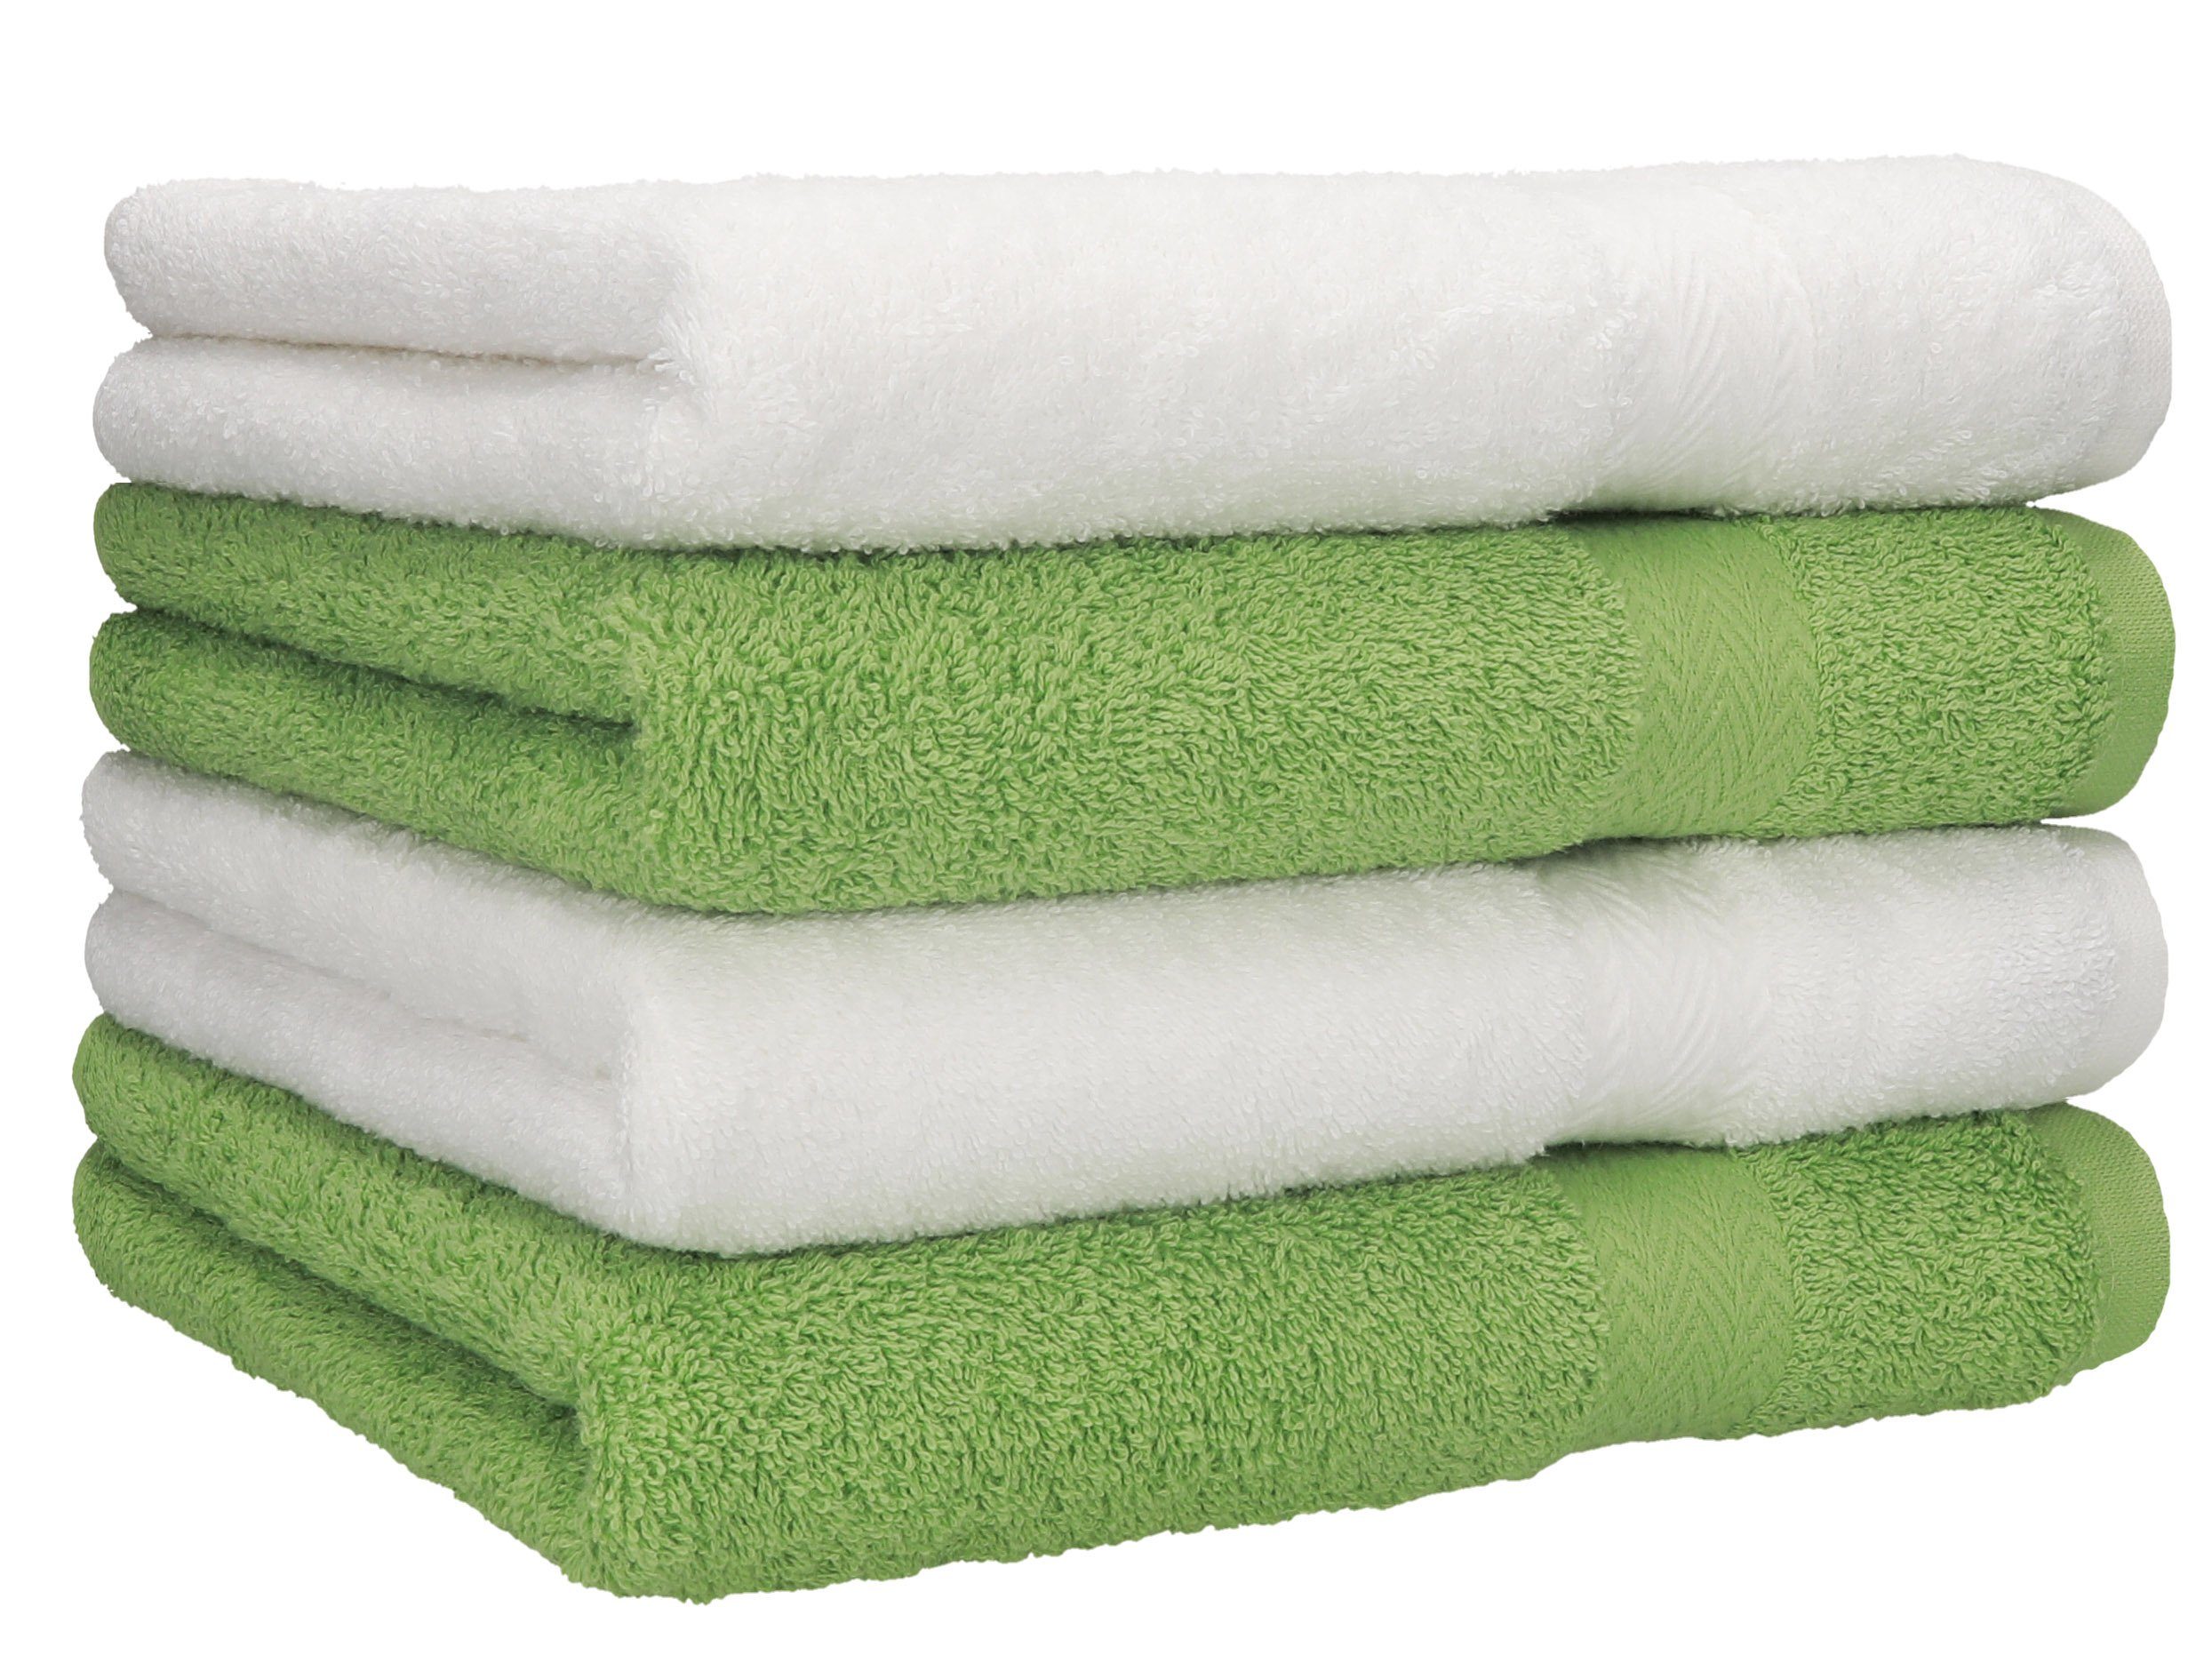 Betz Handtücher 4 Stück Handtücher Premium 4 Handtücher Farbe weiß und apfelgrün, 100% Baumwolle